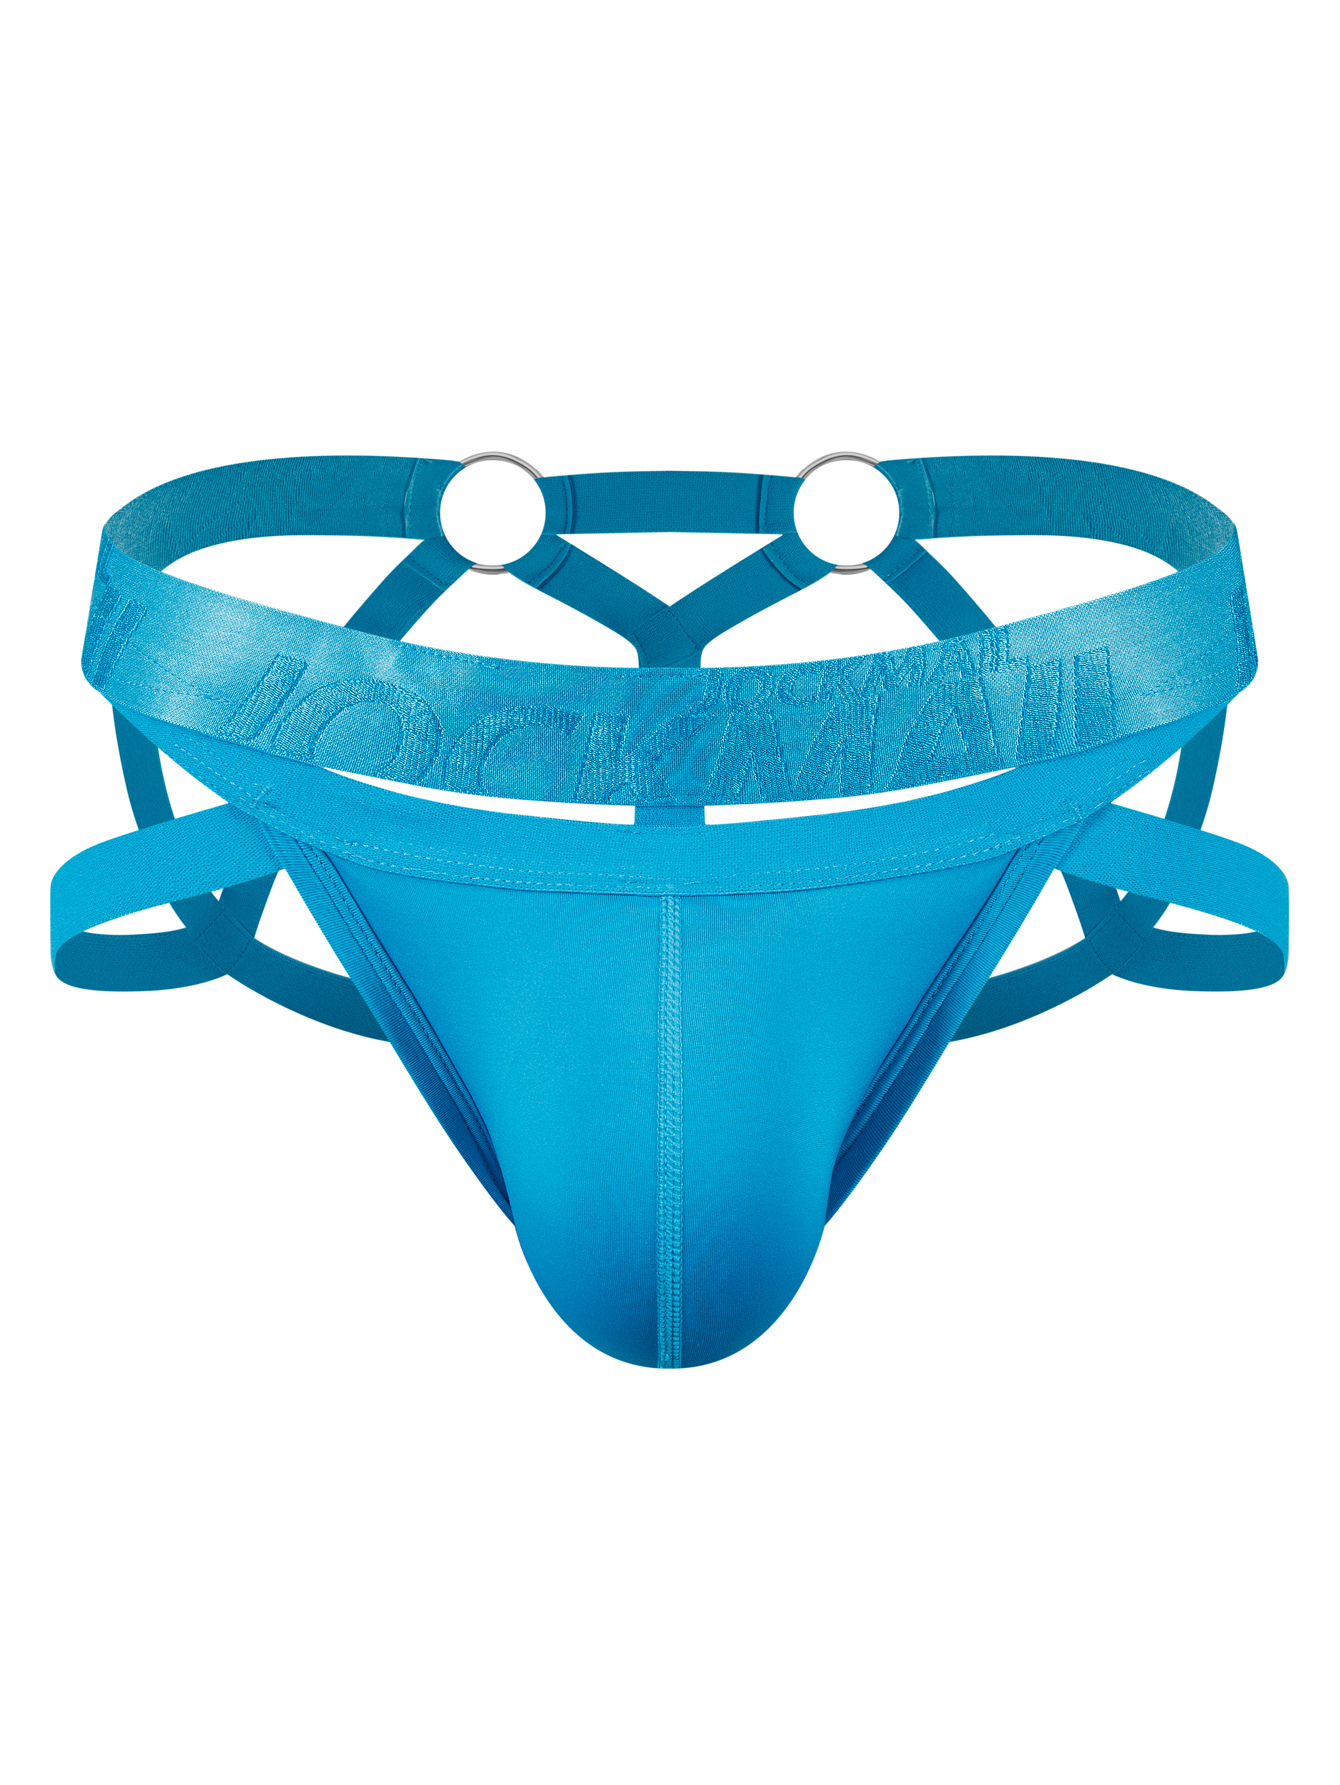 Men's Semi-transparent Jockstrap Thong Underwear T-back Thong G-string  Underpants S-3xl